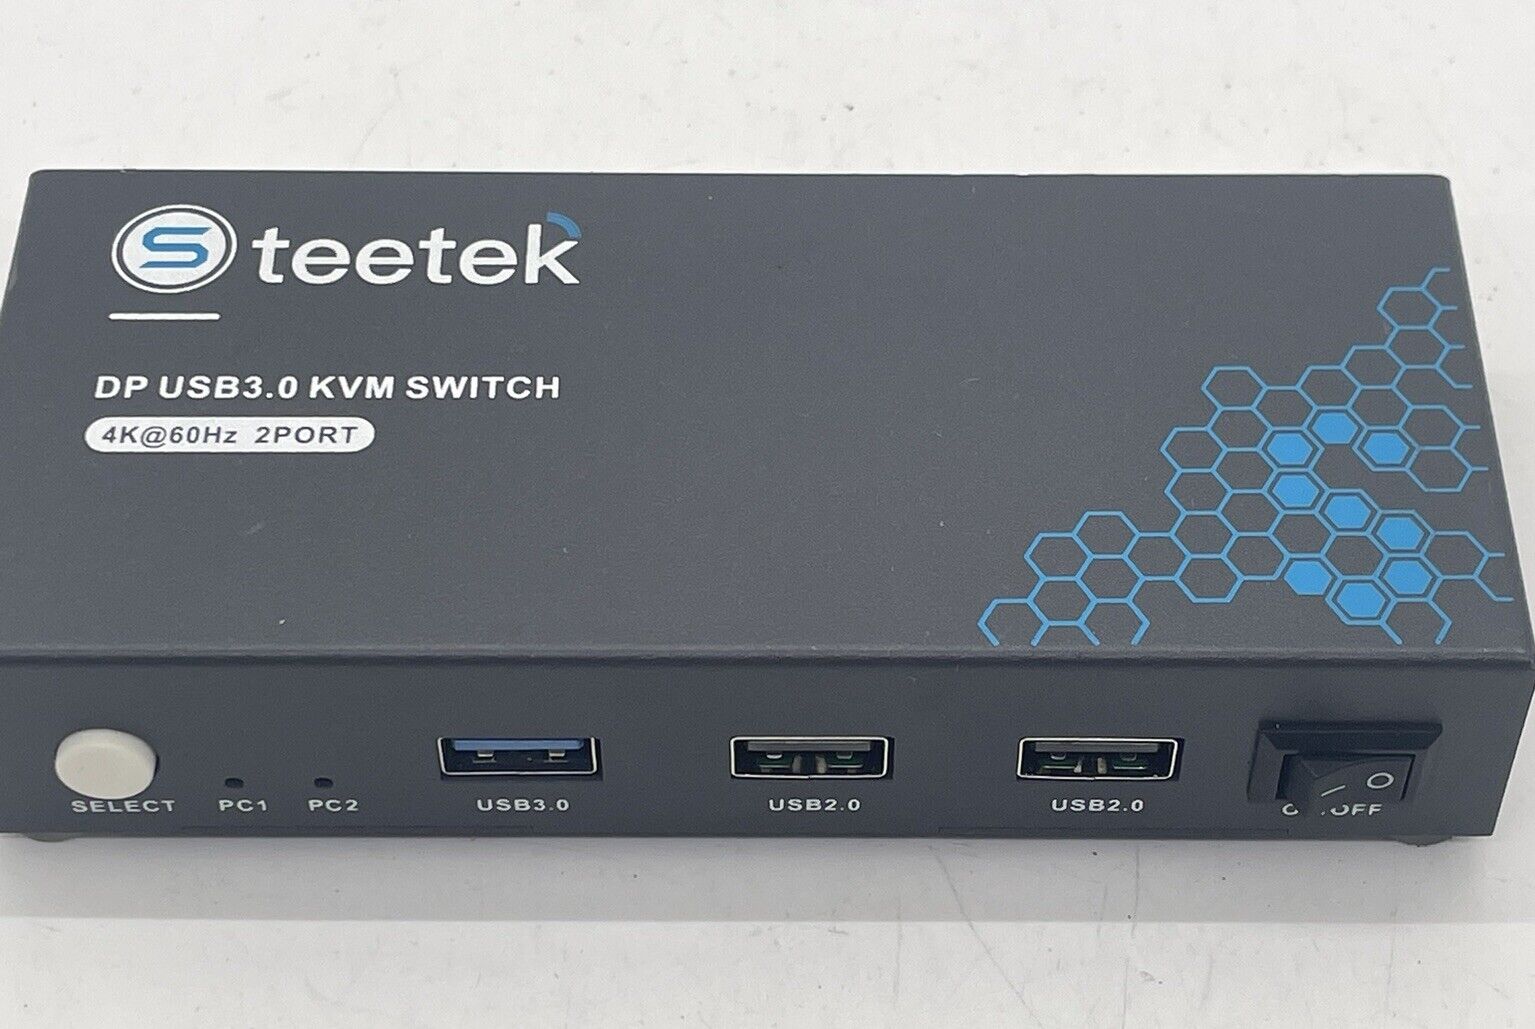 Steetek DP USB 3.0 KVM Switch Dual Monitor 2-Port 4K@60Hz NO POWER SUPPLY